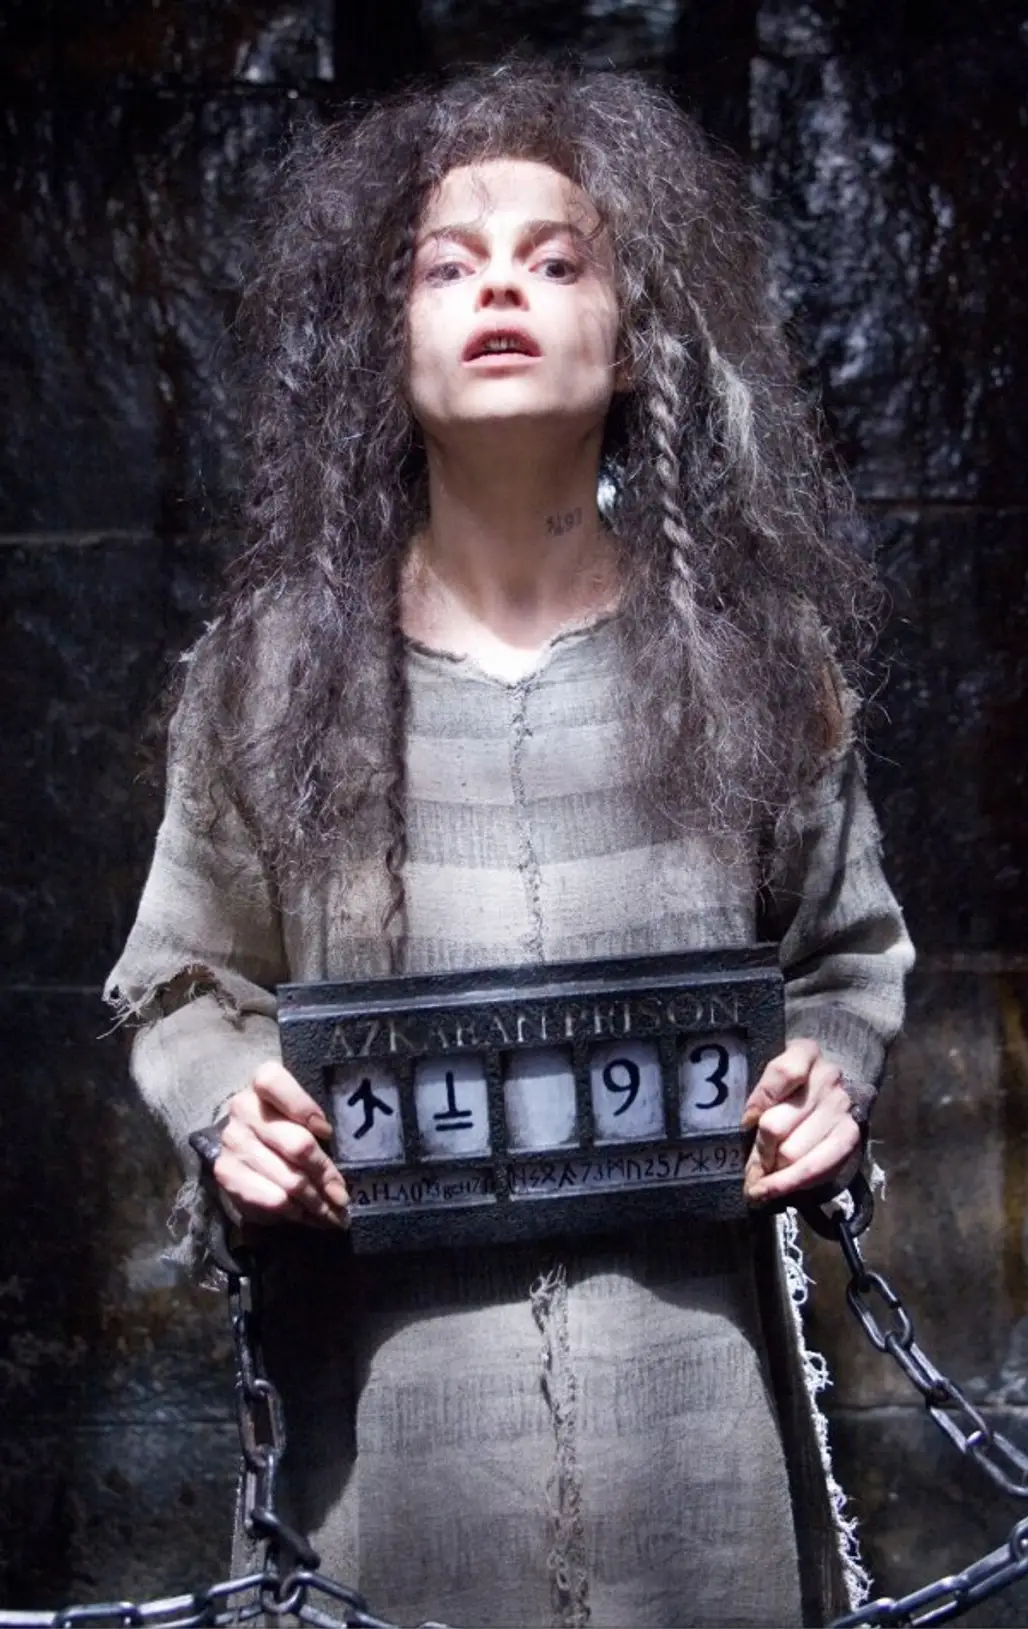 Bellatrix LeStrange from Harry Potter